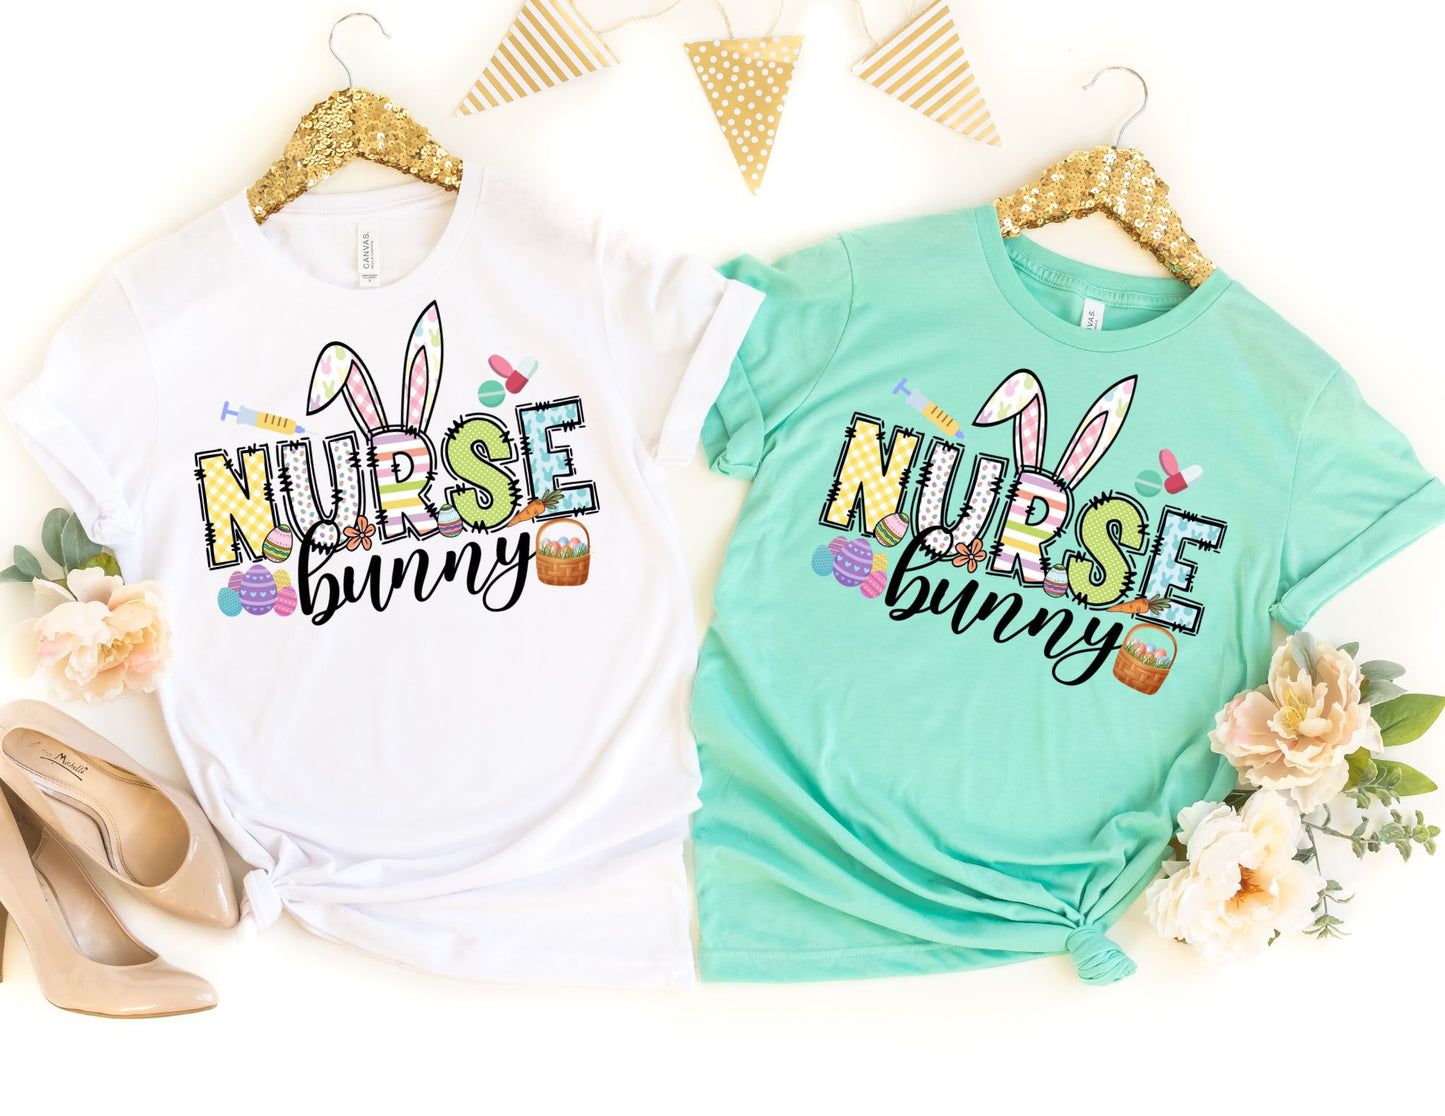 Nurse Bunny Shirt - Easter Nurse Shirt